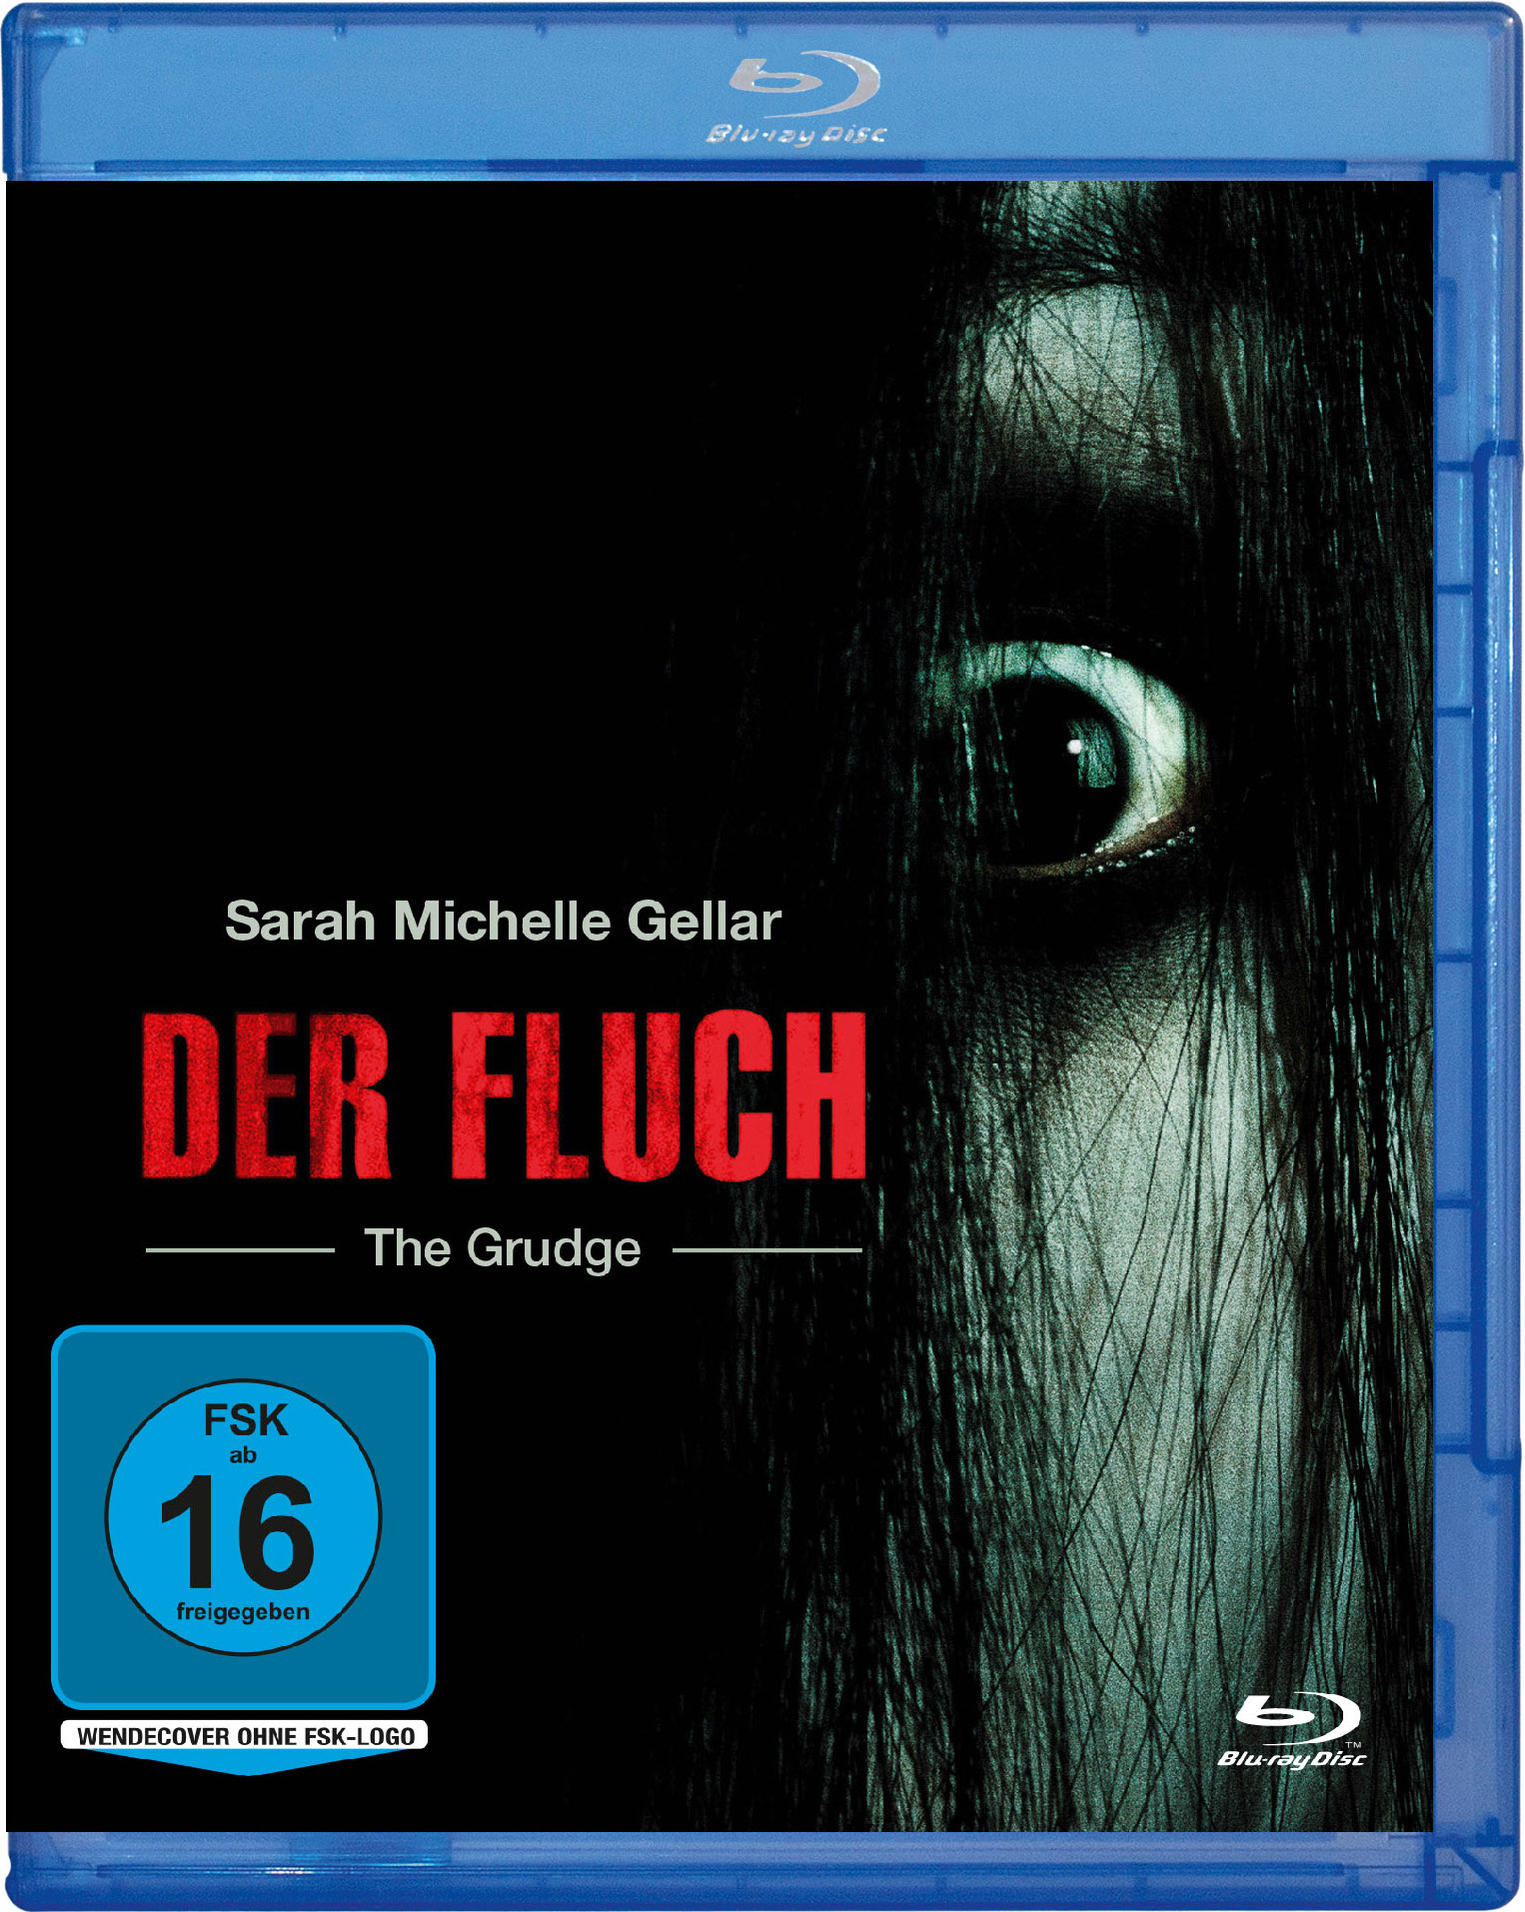 Grudge The Fluch Ju-On - Der - Blu-ray